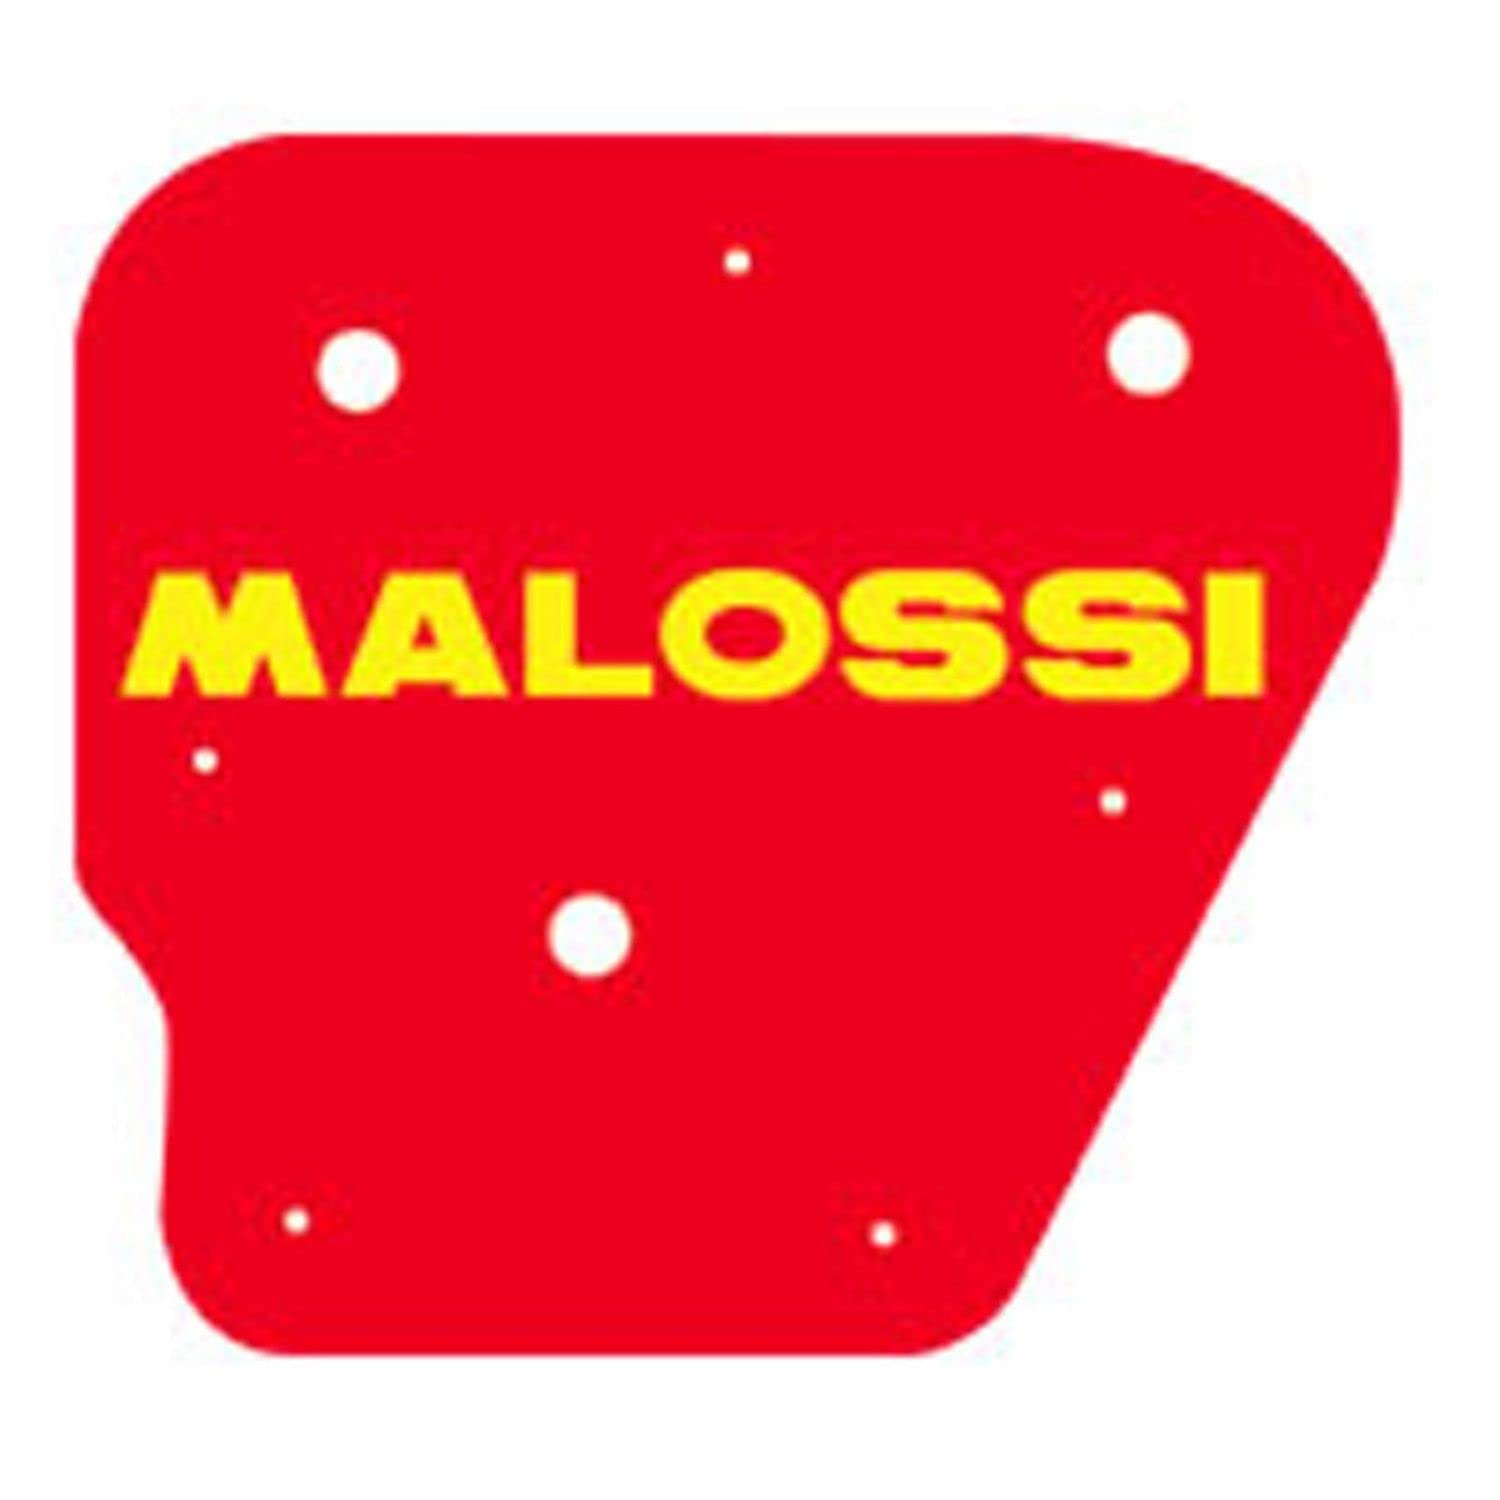 Luftfiltereinsatz MALOSSI Red Sponge - Yamaha Axis 50 von MALOSSI